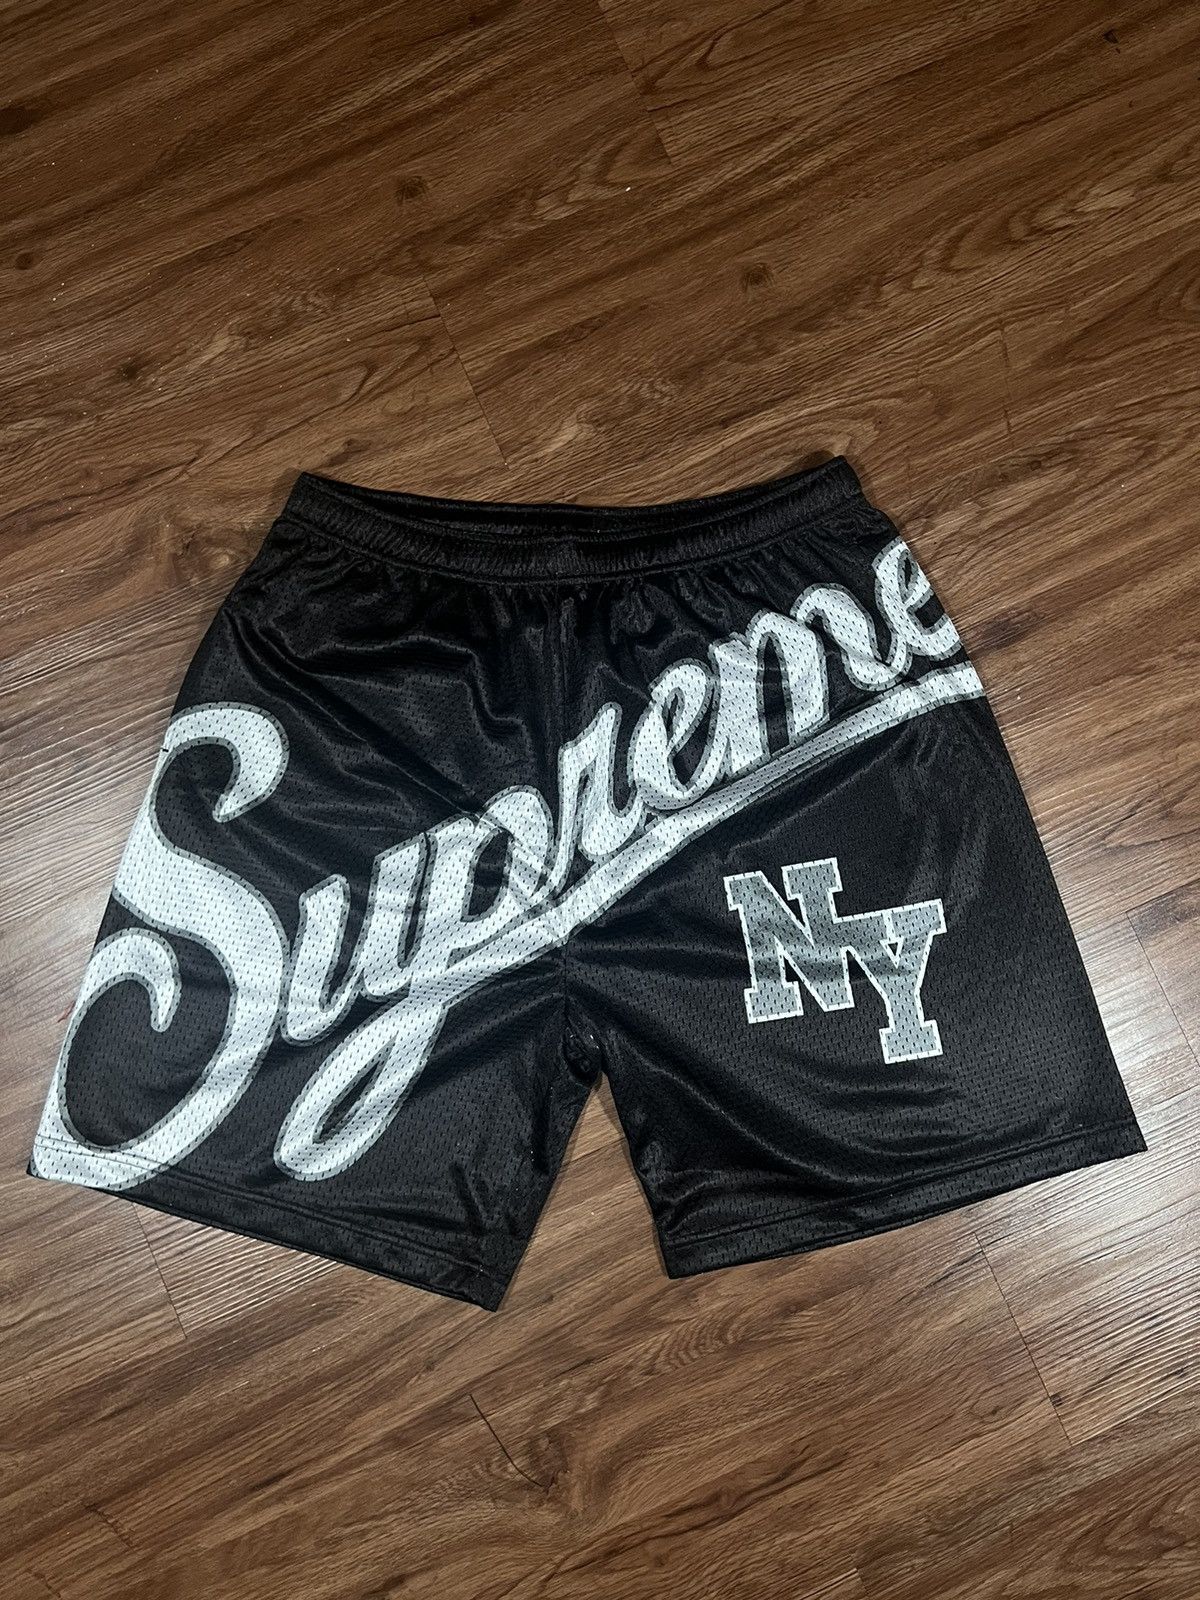 Supreme Supreme Big Script Mesh Shorts Sz M | Grailed